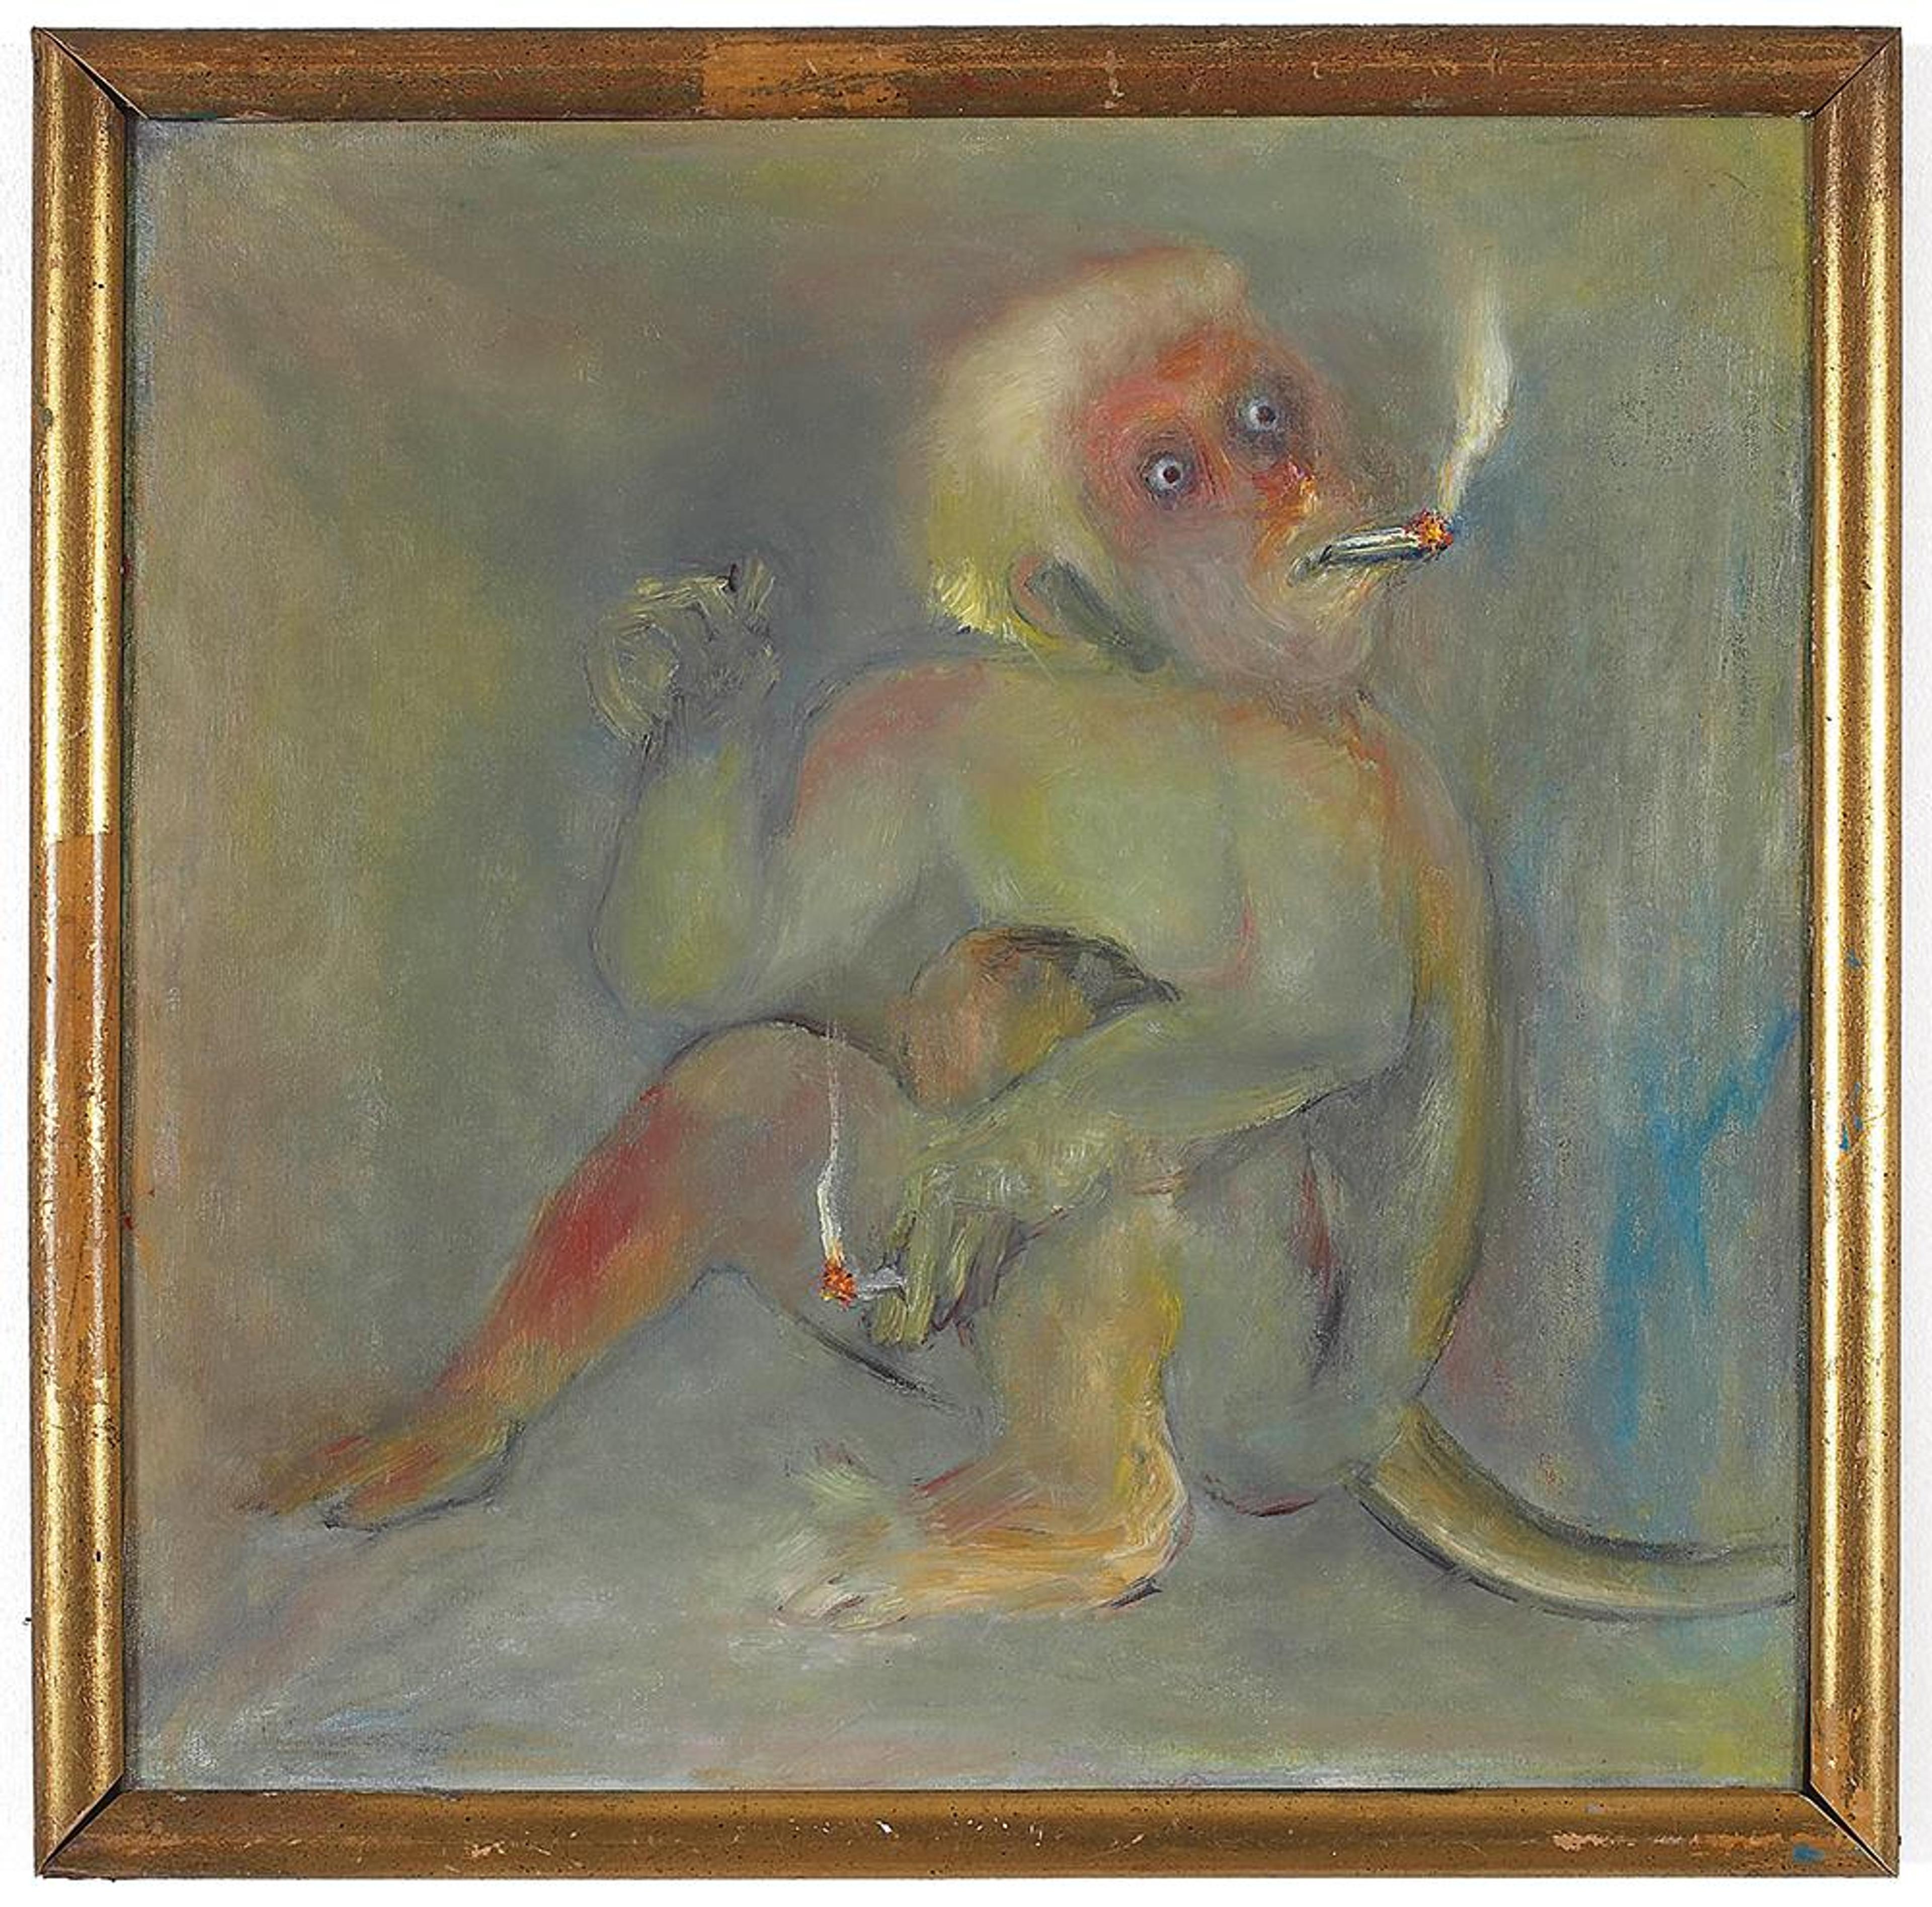 Monkey Smoking , 2007 Oil on canvas, 48 x 48 cm